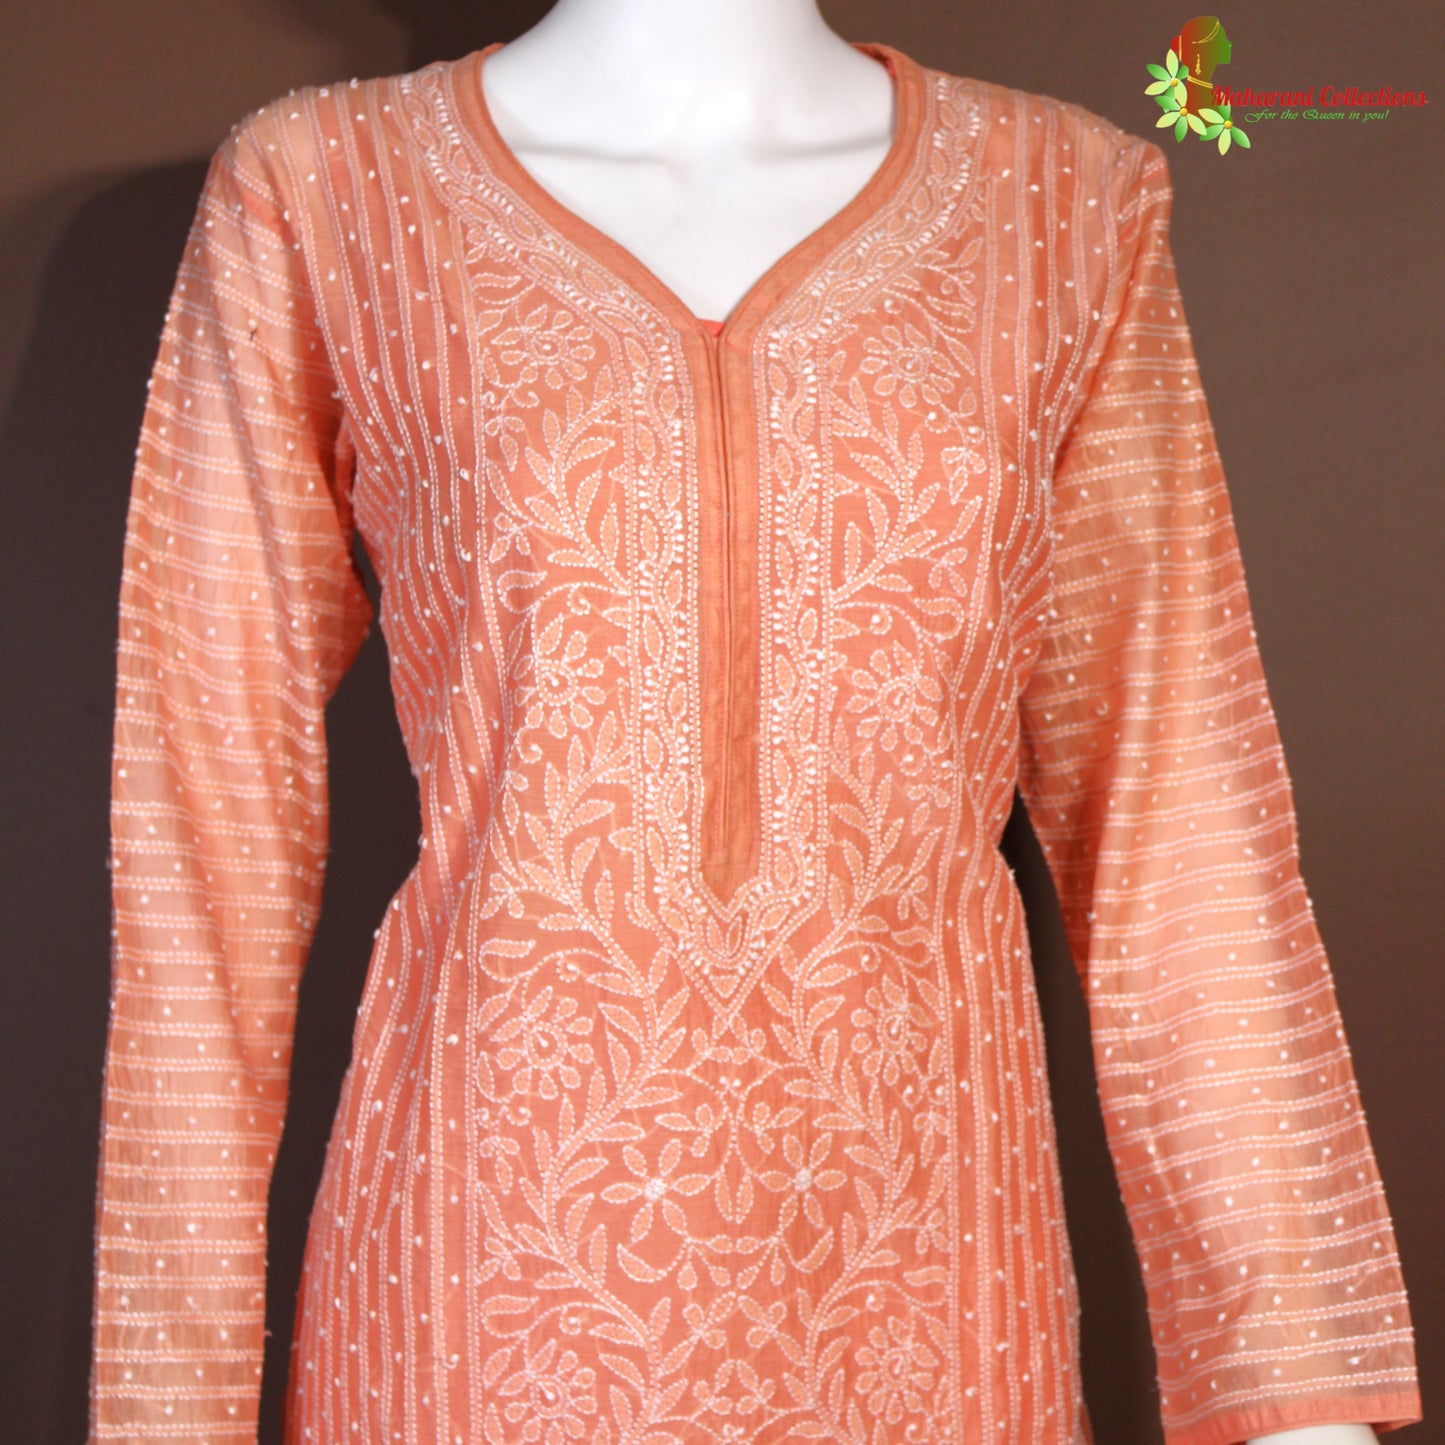 Maharani's Lucknowi Chikankari Pant Suit - Peach (L) - Chanderi Silk